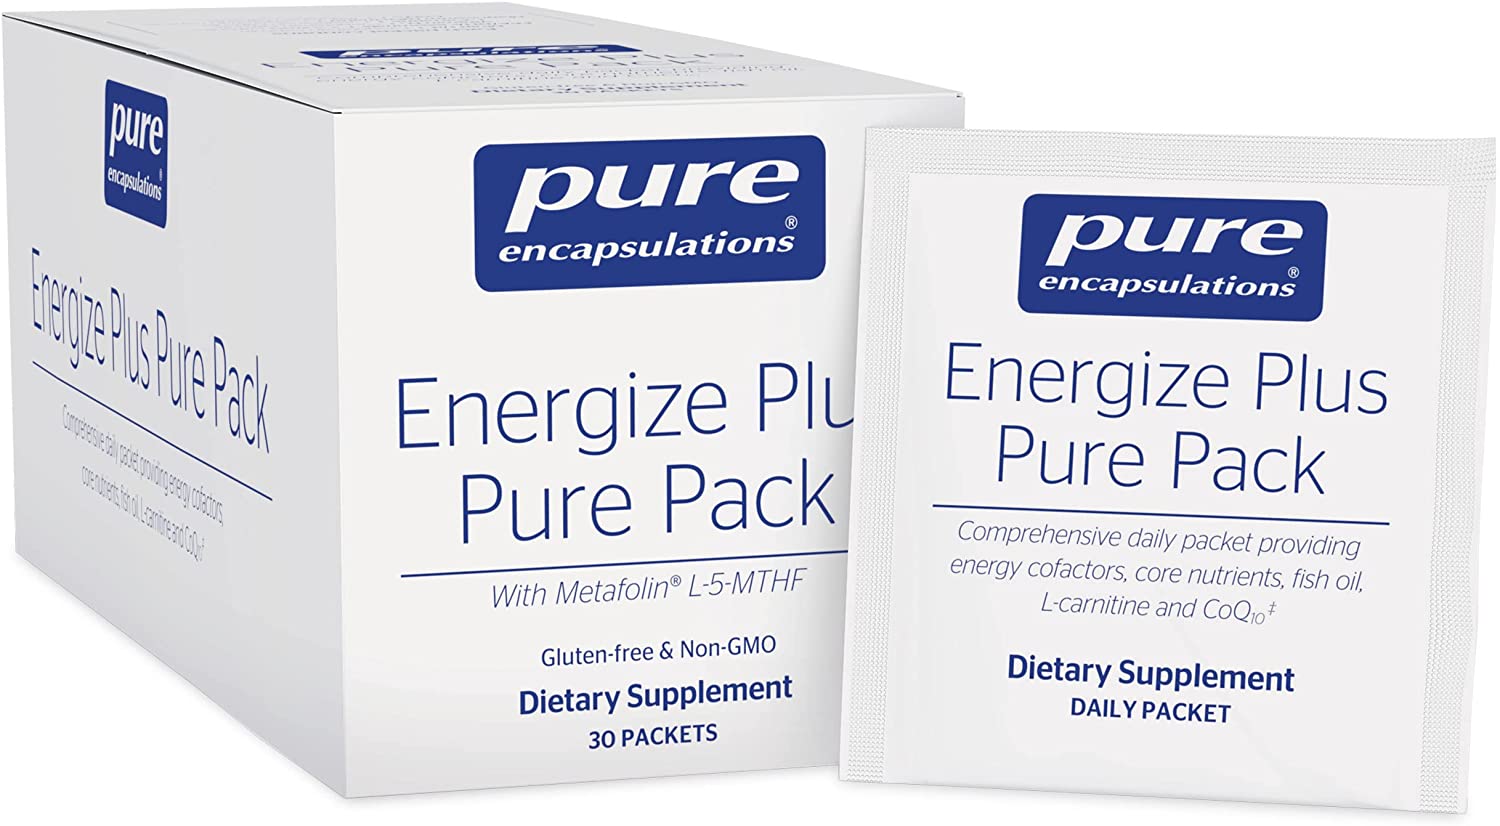 EnergizePlusPurePack30packets